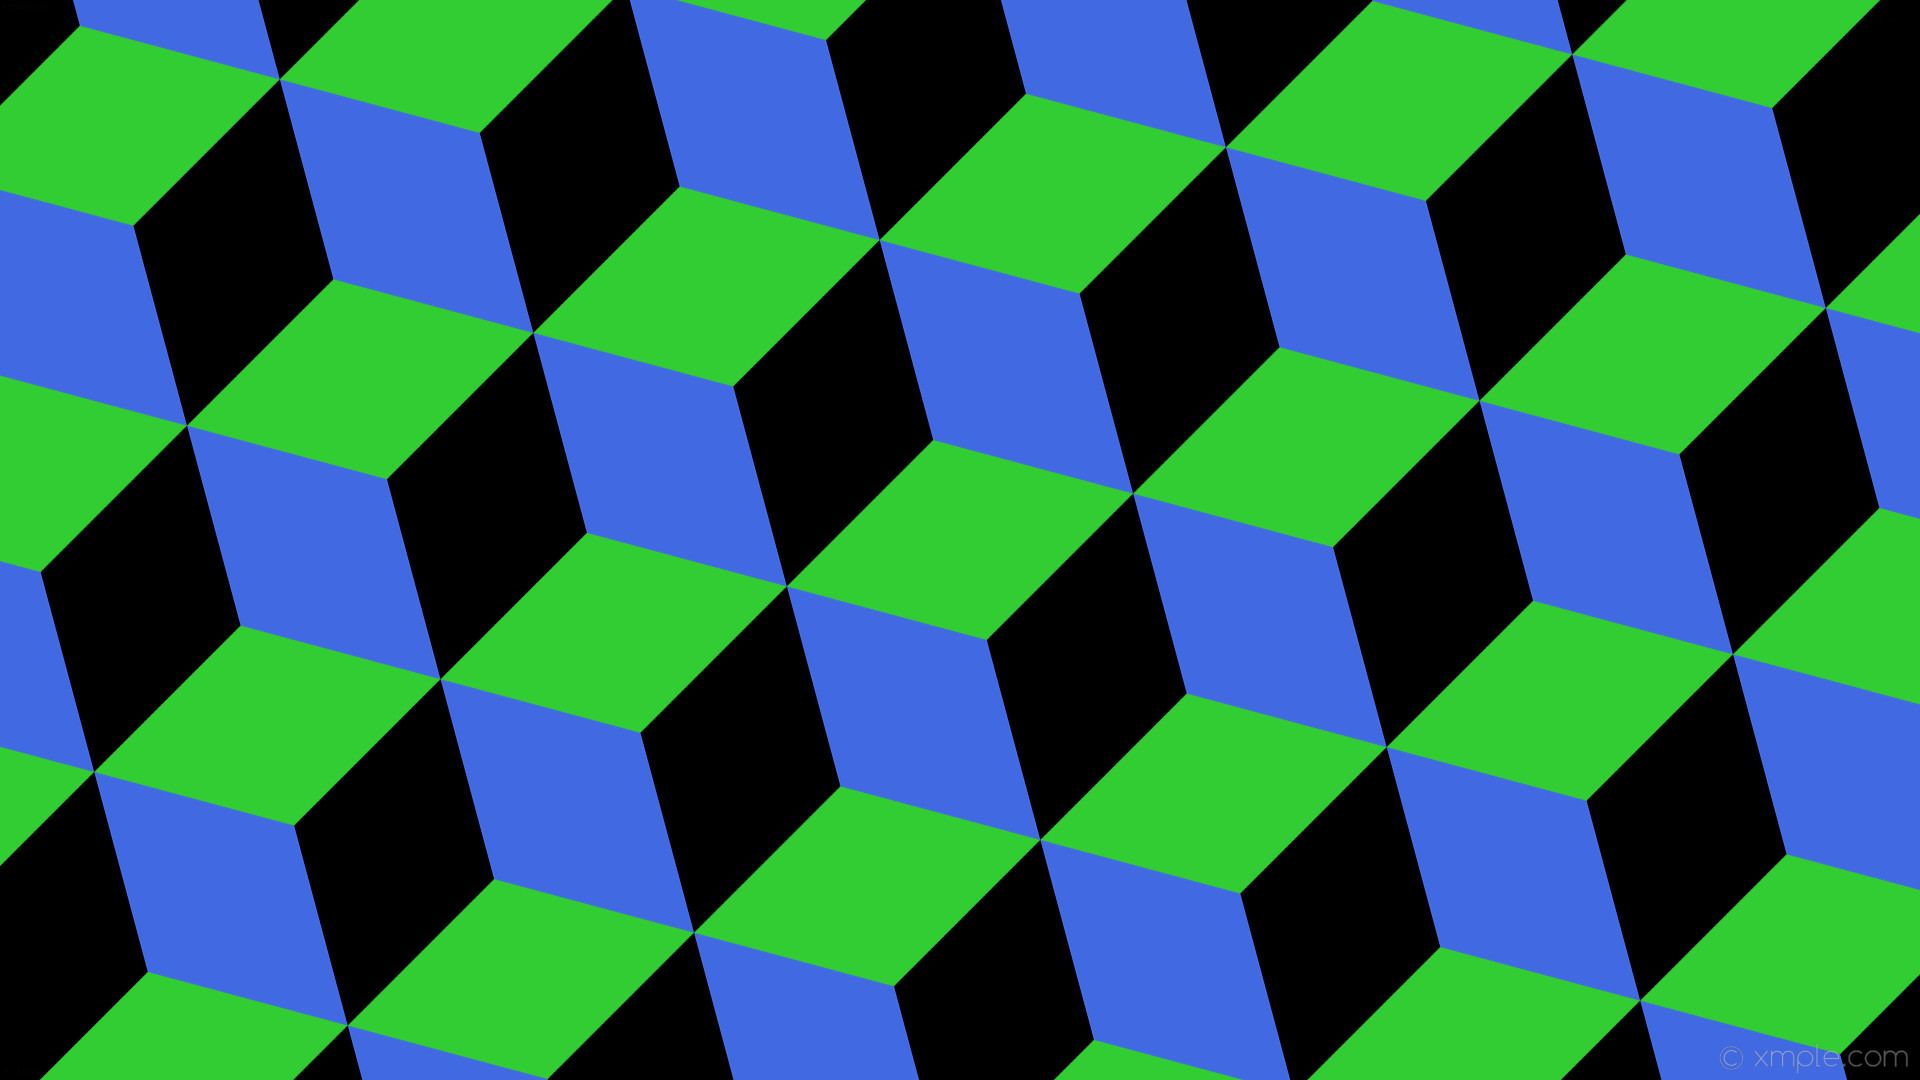 1920x1080 wallpaper green blue black 3d cubes lime green royal blue #32cd32 #4169e1  #000000